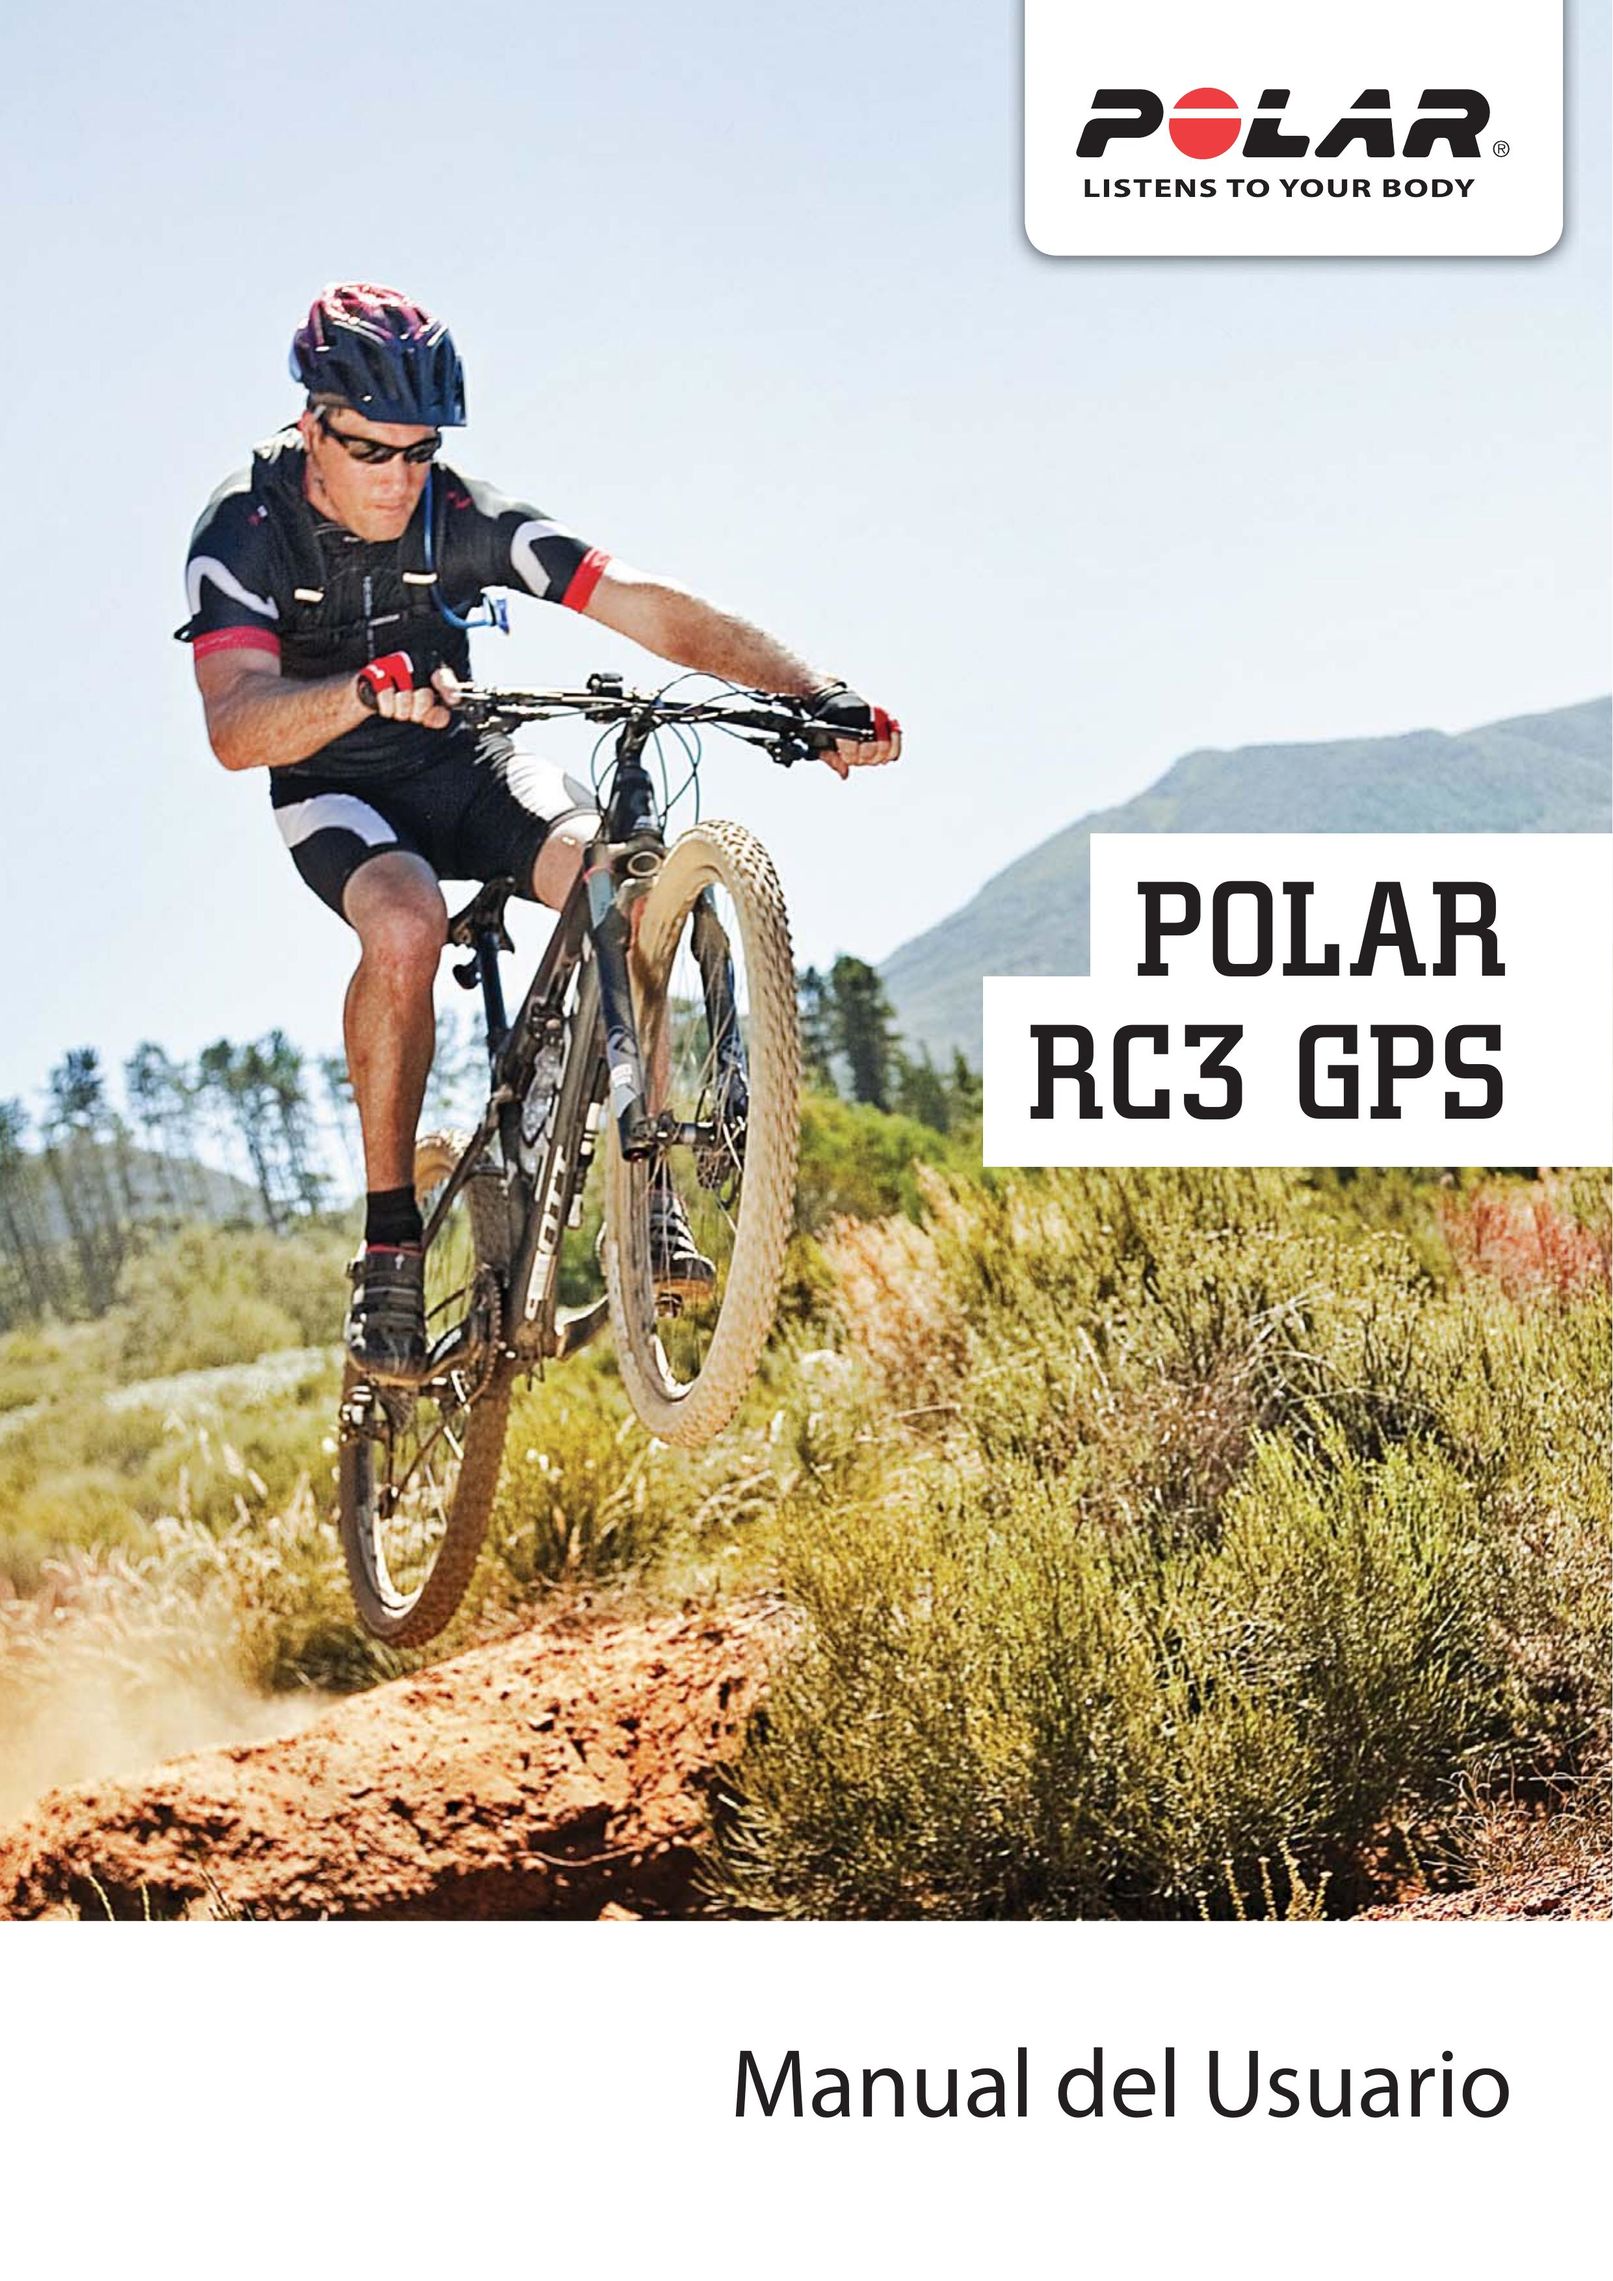 Polar RC3GPS Fitness Electronics User Manual